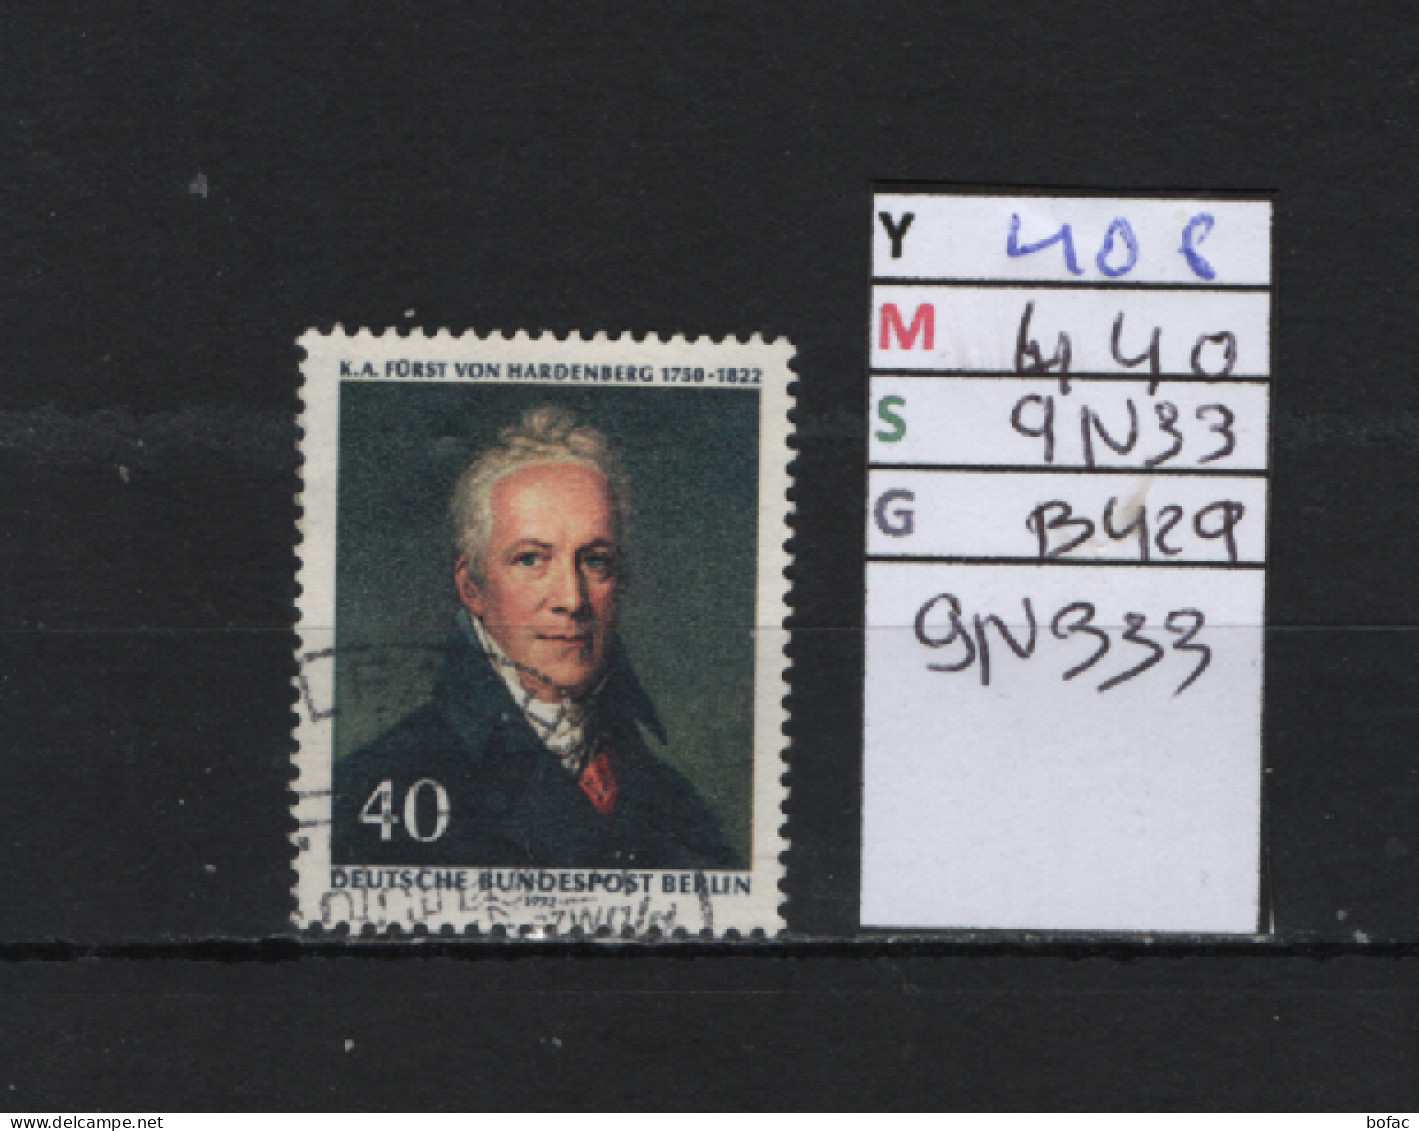 P. FIXE Obl 406 YT 440 MIC 9N333 SCO B429 GIB Karl August Prince De Hardenberg 1972 *Berlin* 75/03 - Used Stamps